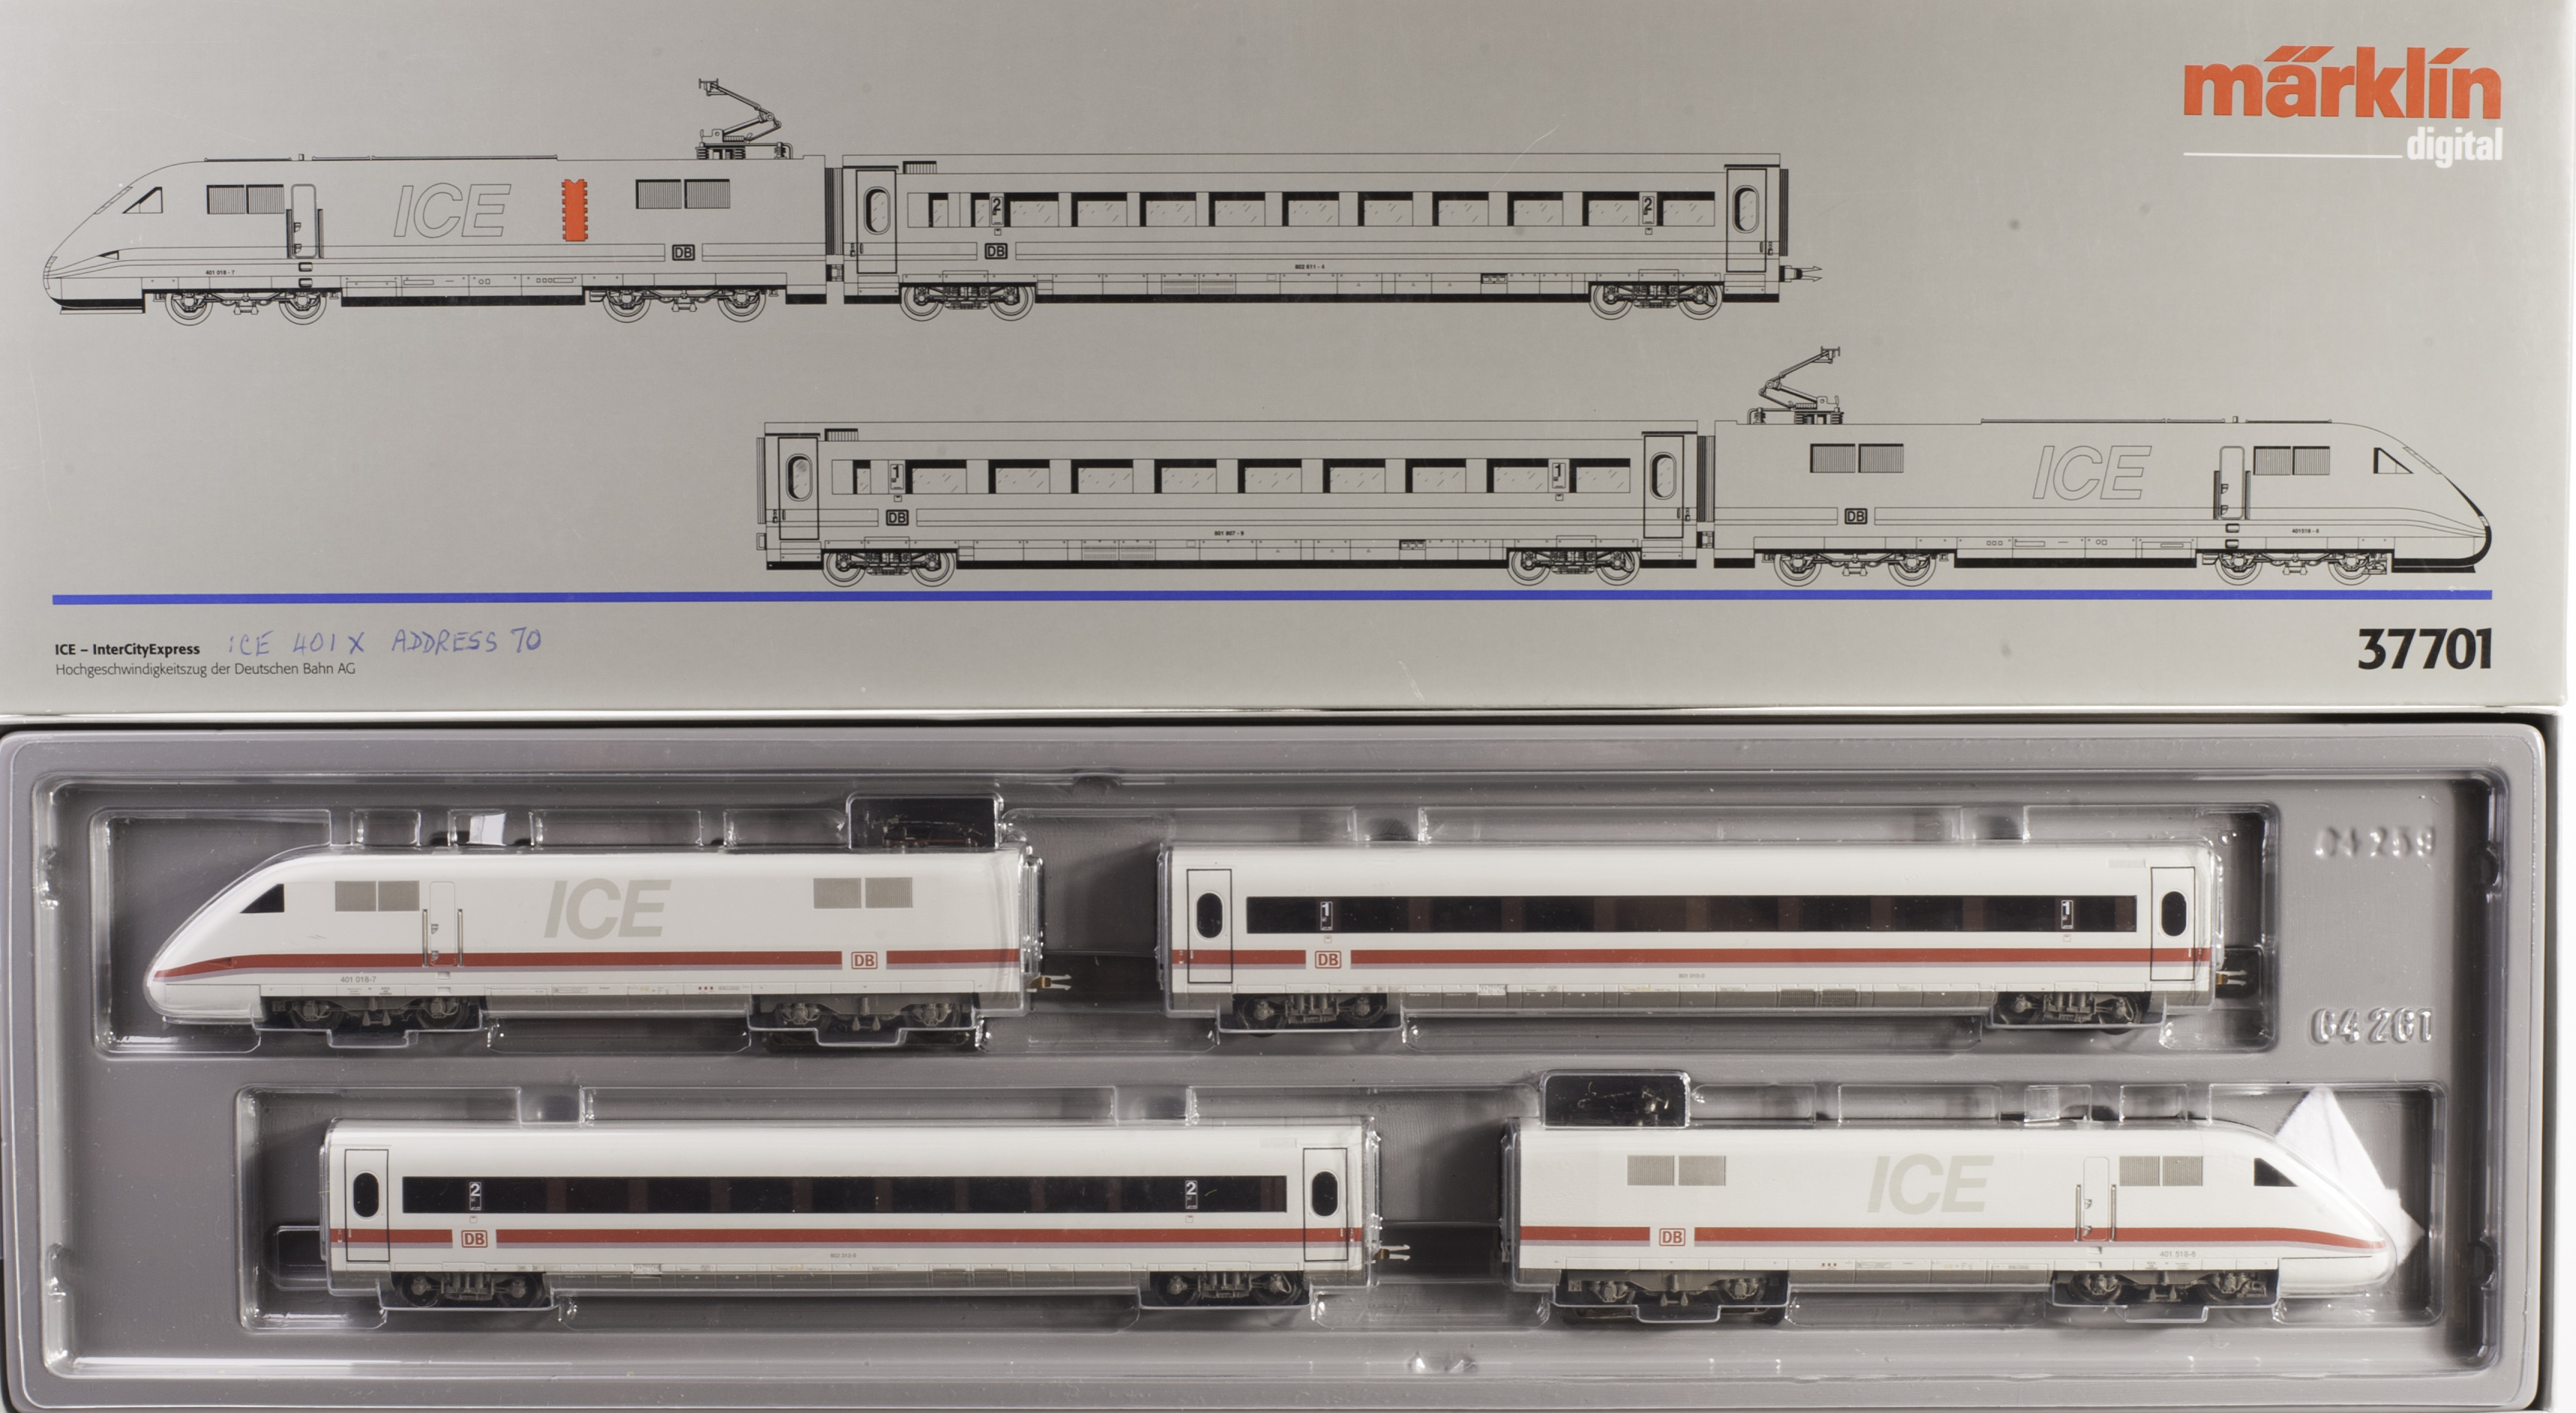 Märklin Digital H0 Gauge 3-rail/stud contact Train Pack: ref 37701 DB ICE 4-car High-Speed train